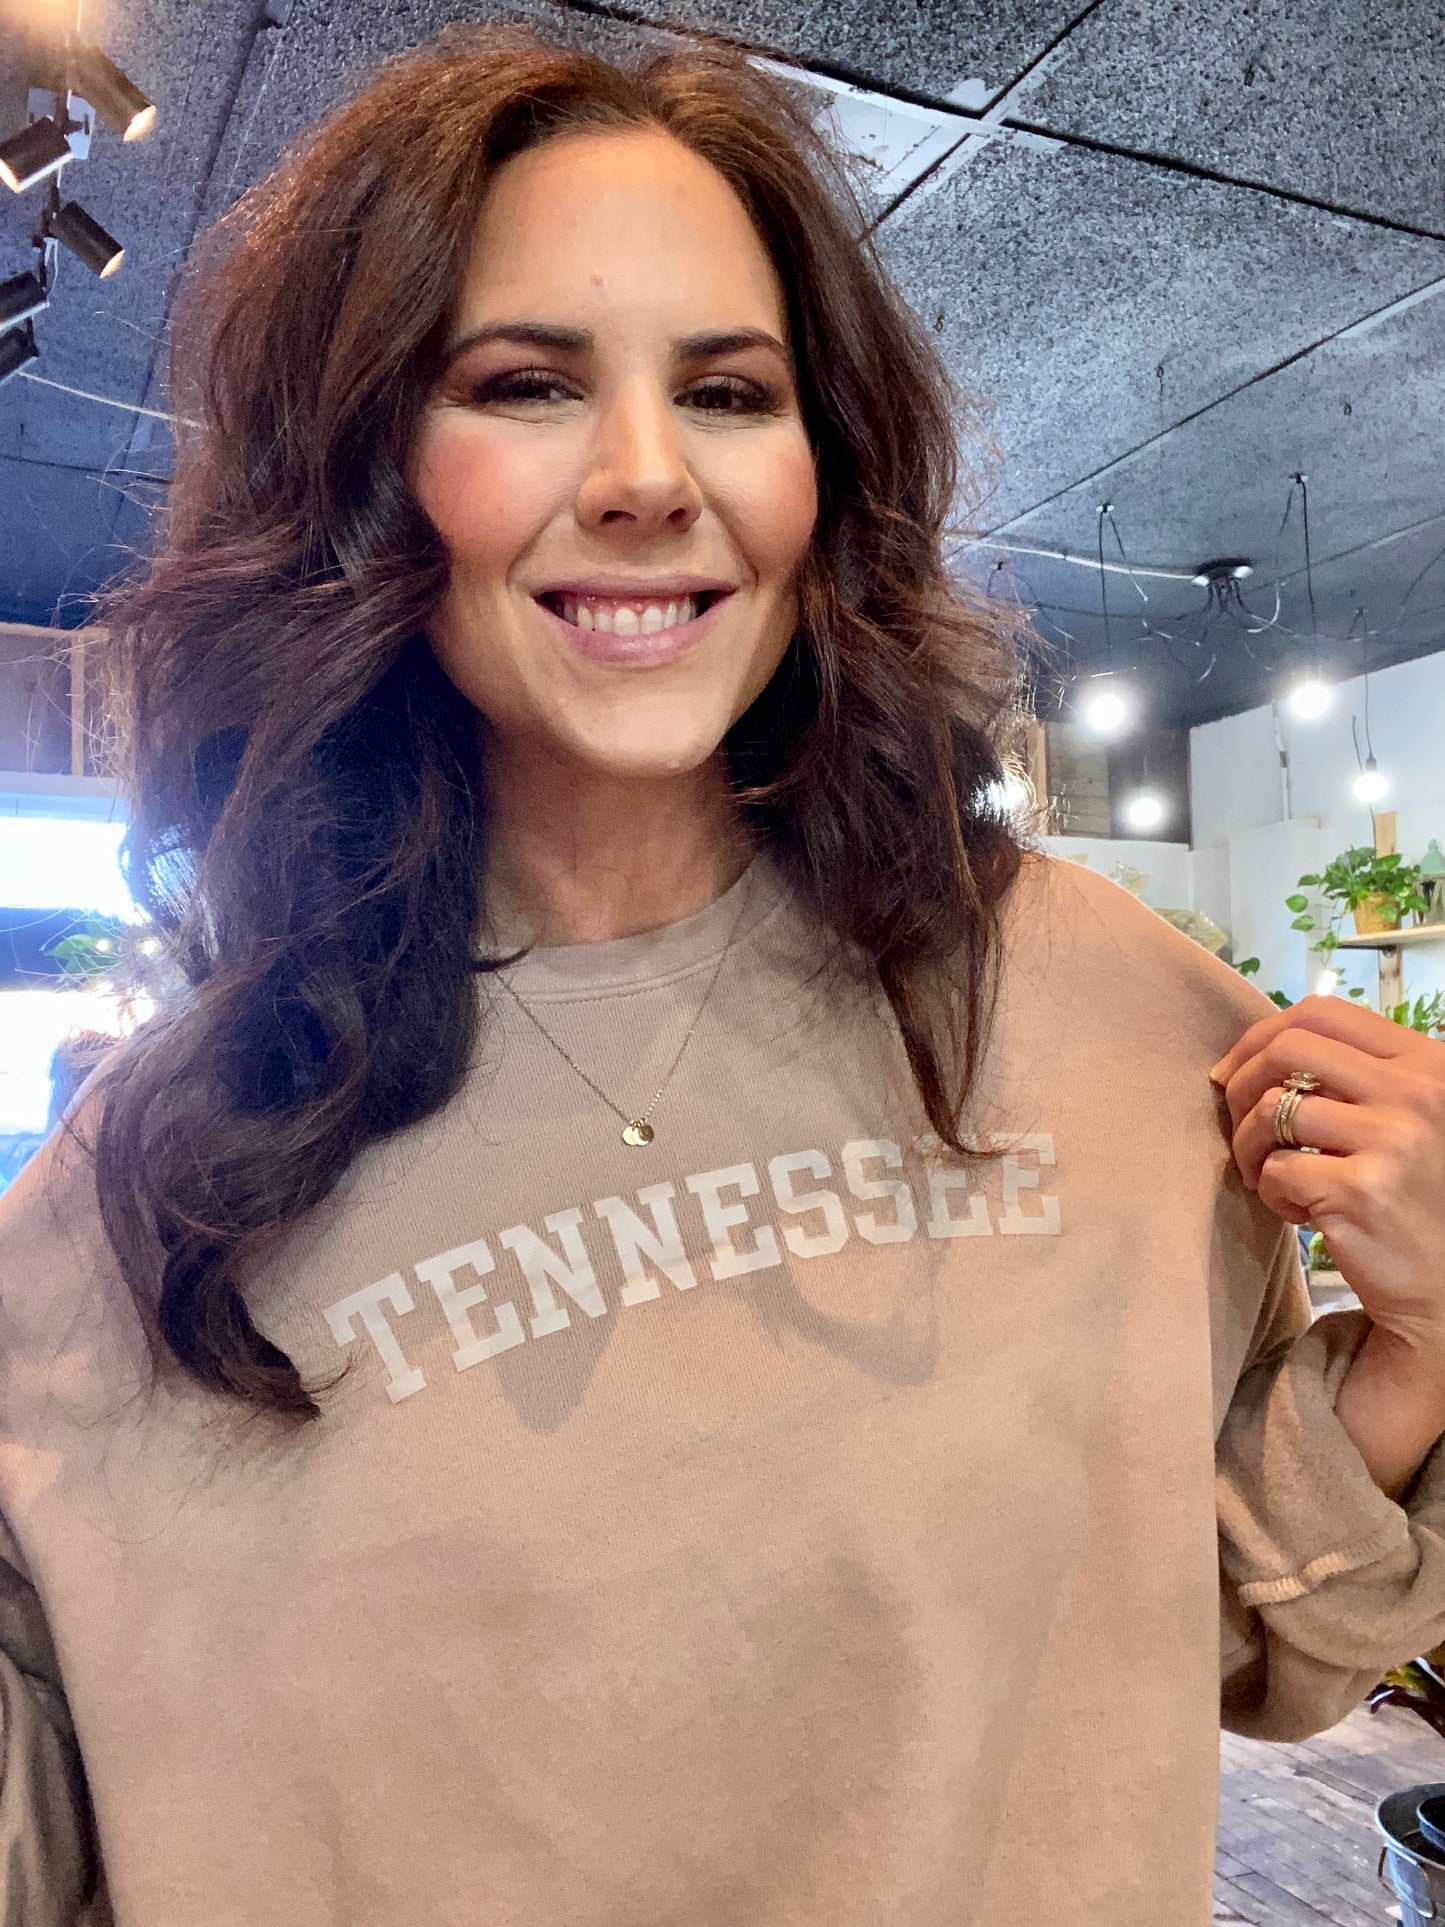 Tan Tennessee Sweatshirt